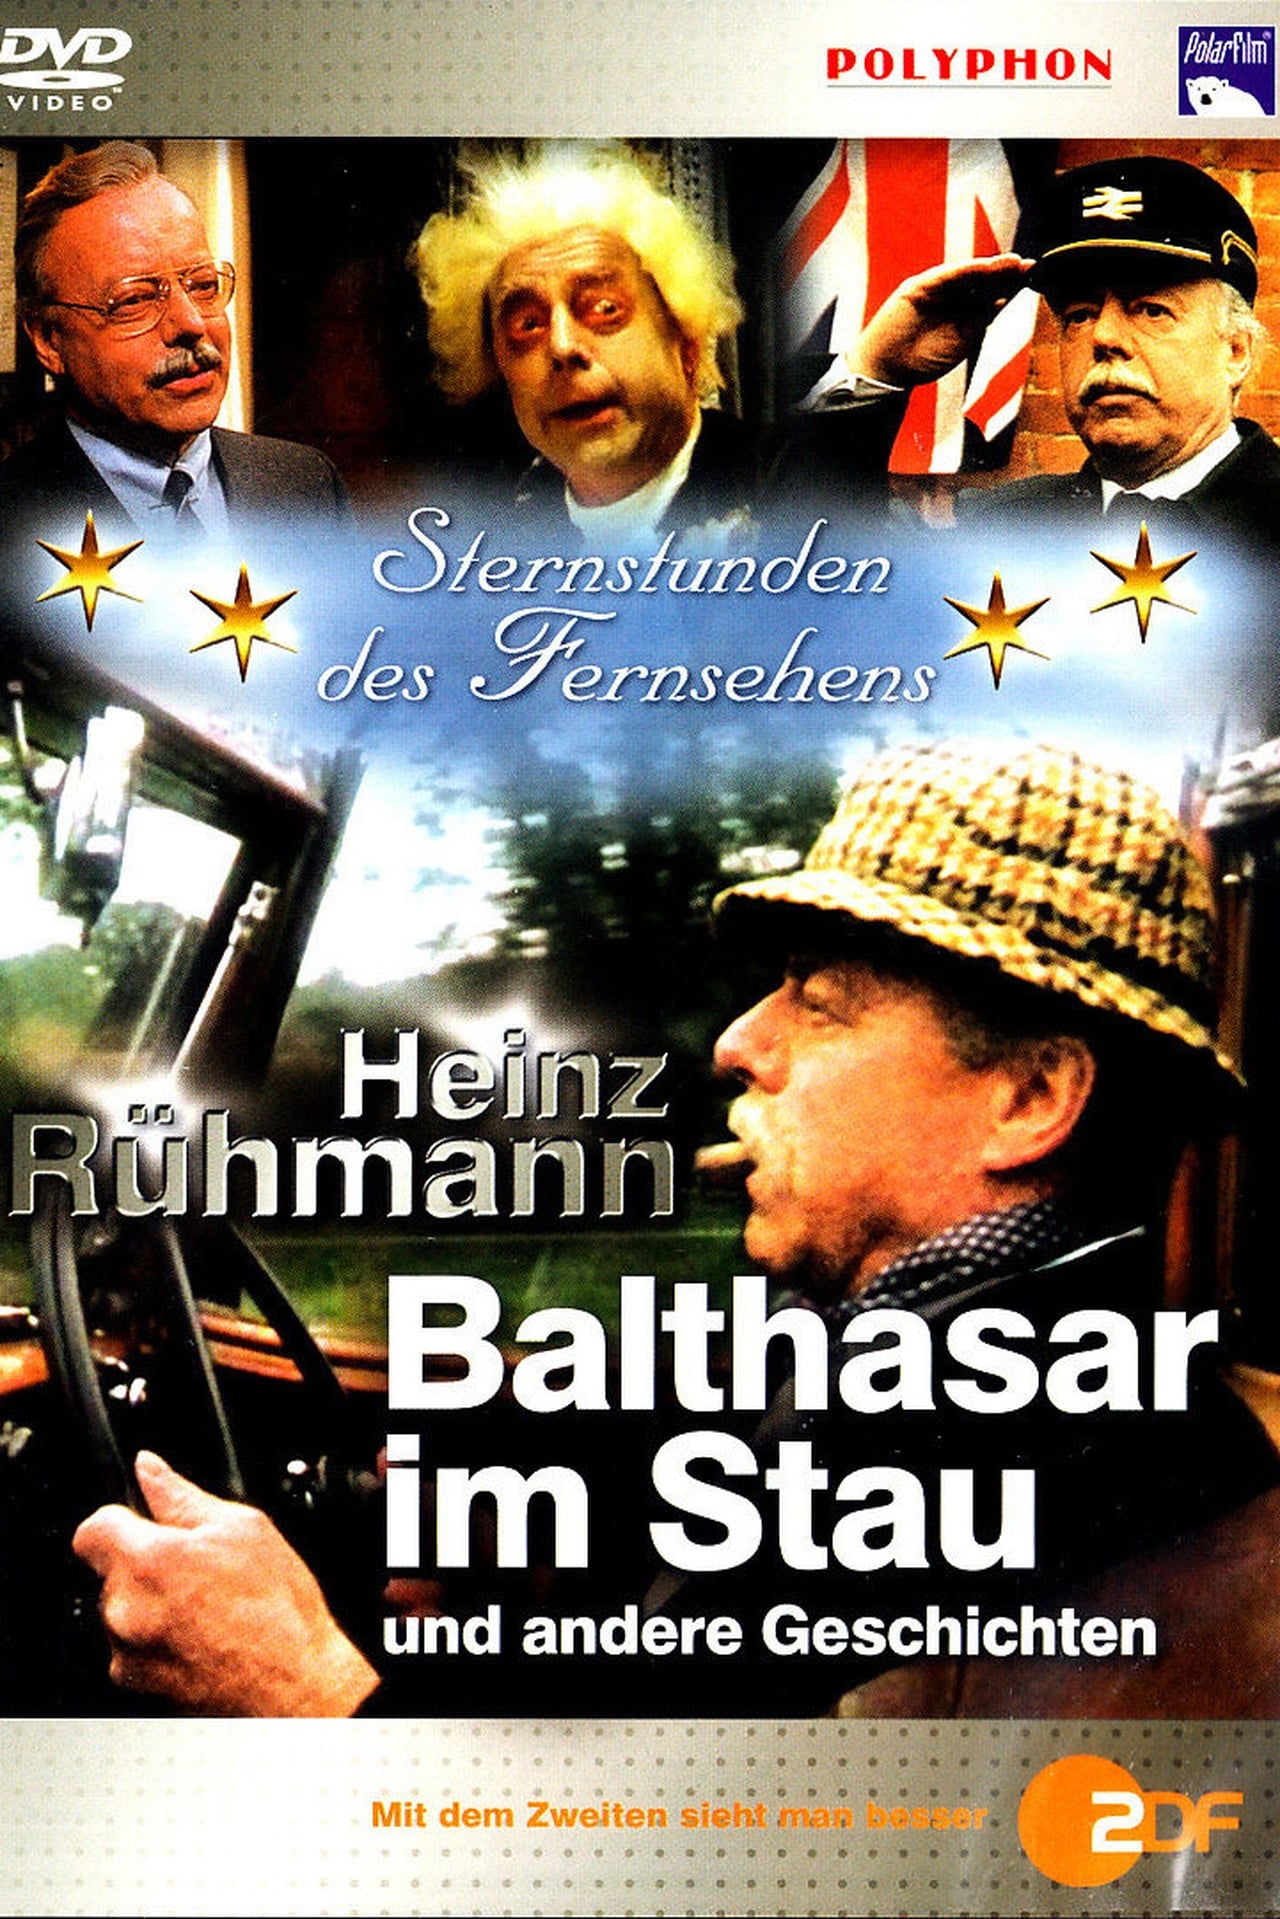 Balthasar im Stau .Heinz Rühmann